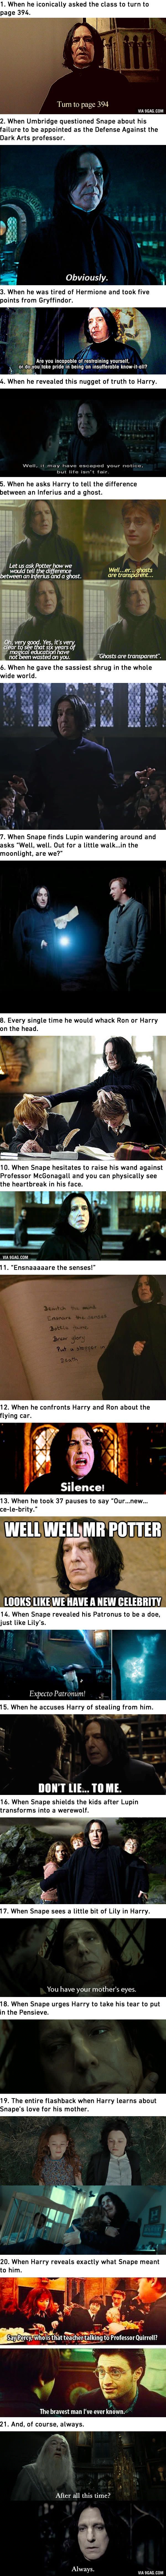 21 Professor Snape Moments In “Harry Potter” That Make Us Love Him. Alan Rickm